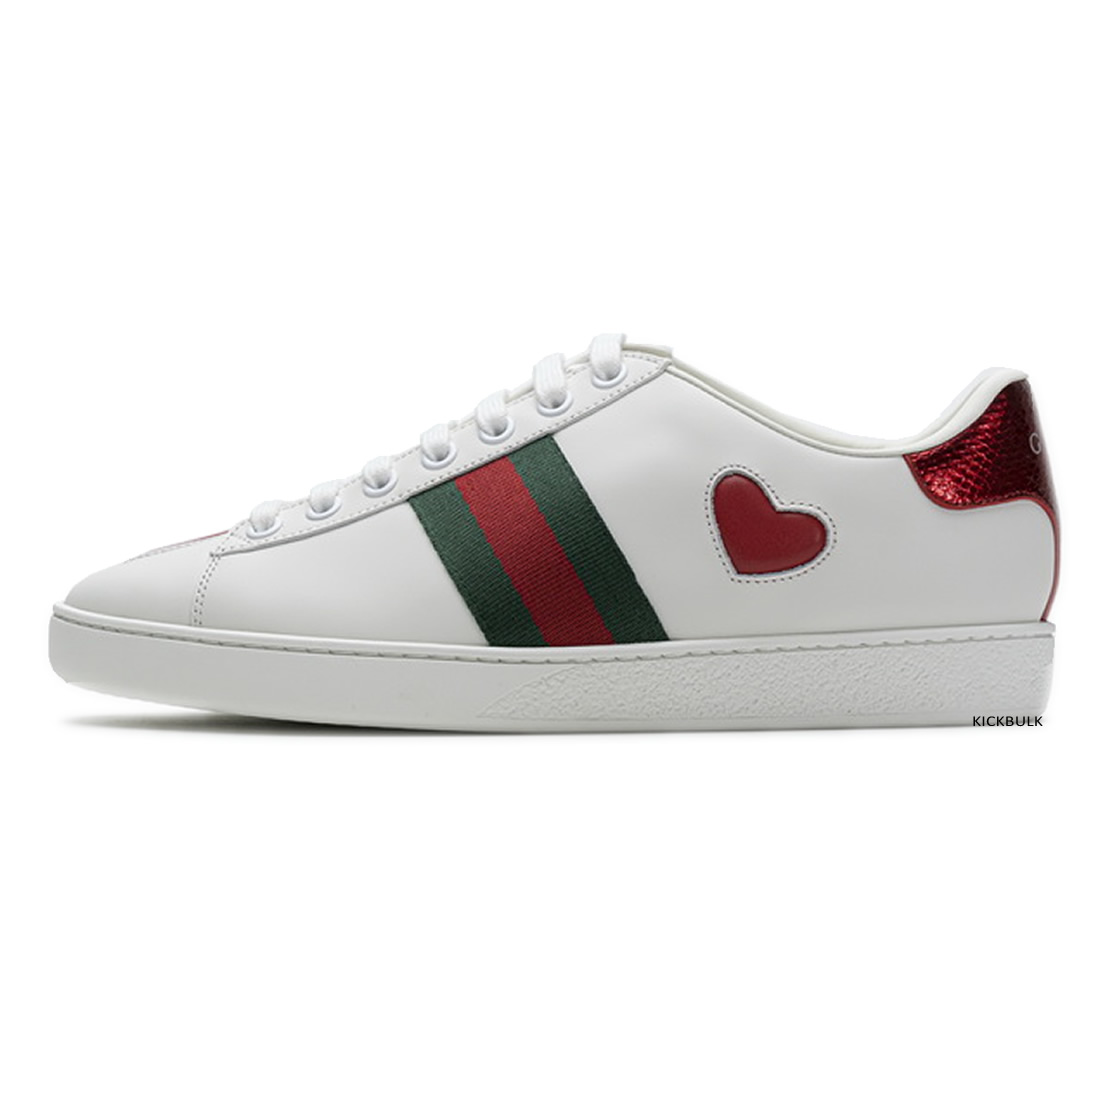 Gucci Love Sneakers 429446a39gq9085 1 - www.kickbulk.co